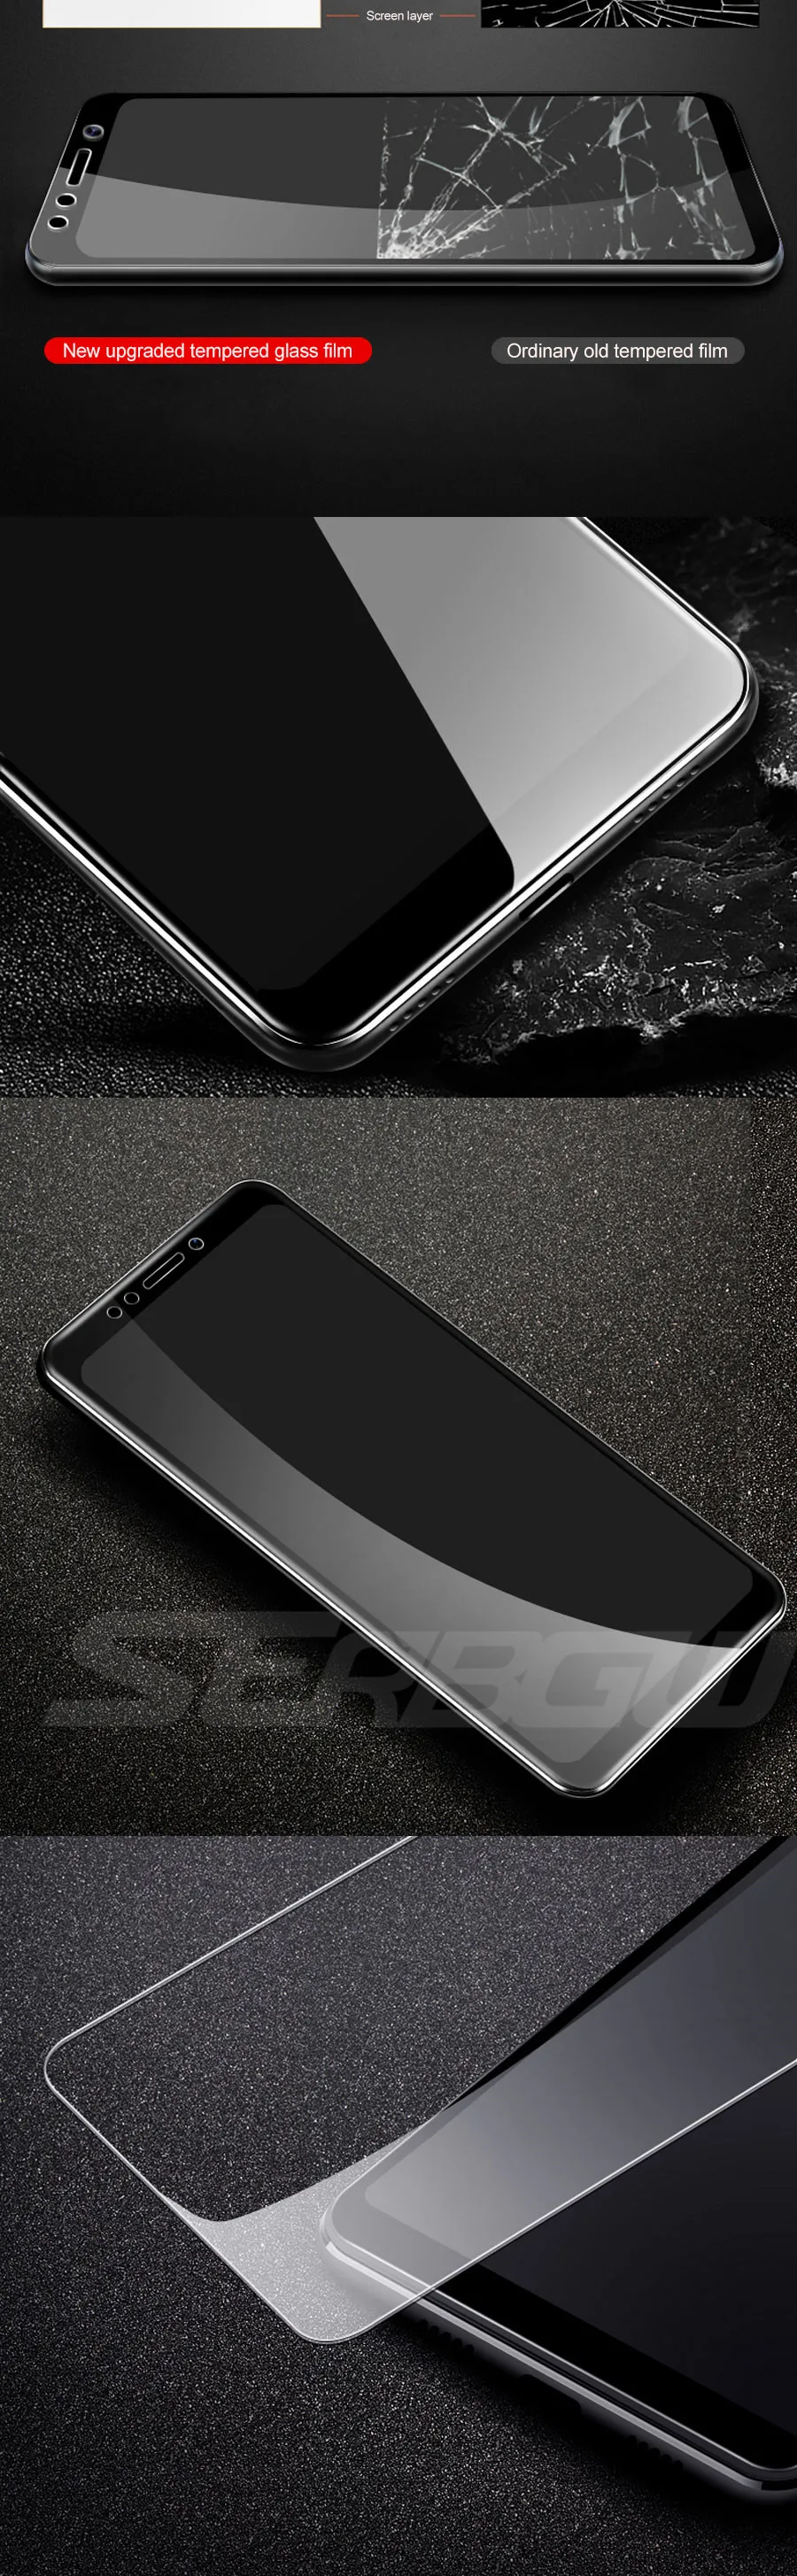 Защитное стекло для Xiaomi Redmi 4 4A 4X 5A 5 Plus закаленное защитное стекло для экрана на Redmi S2 K20 Note 4 4X5 5A Pro пленка